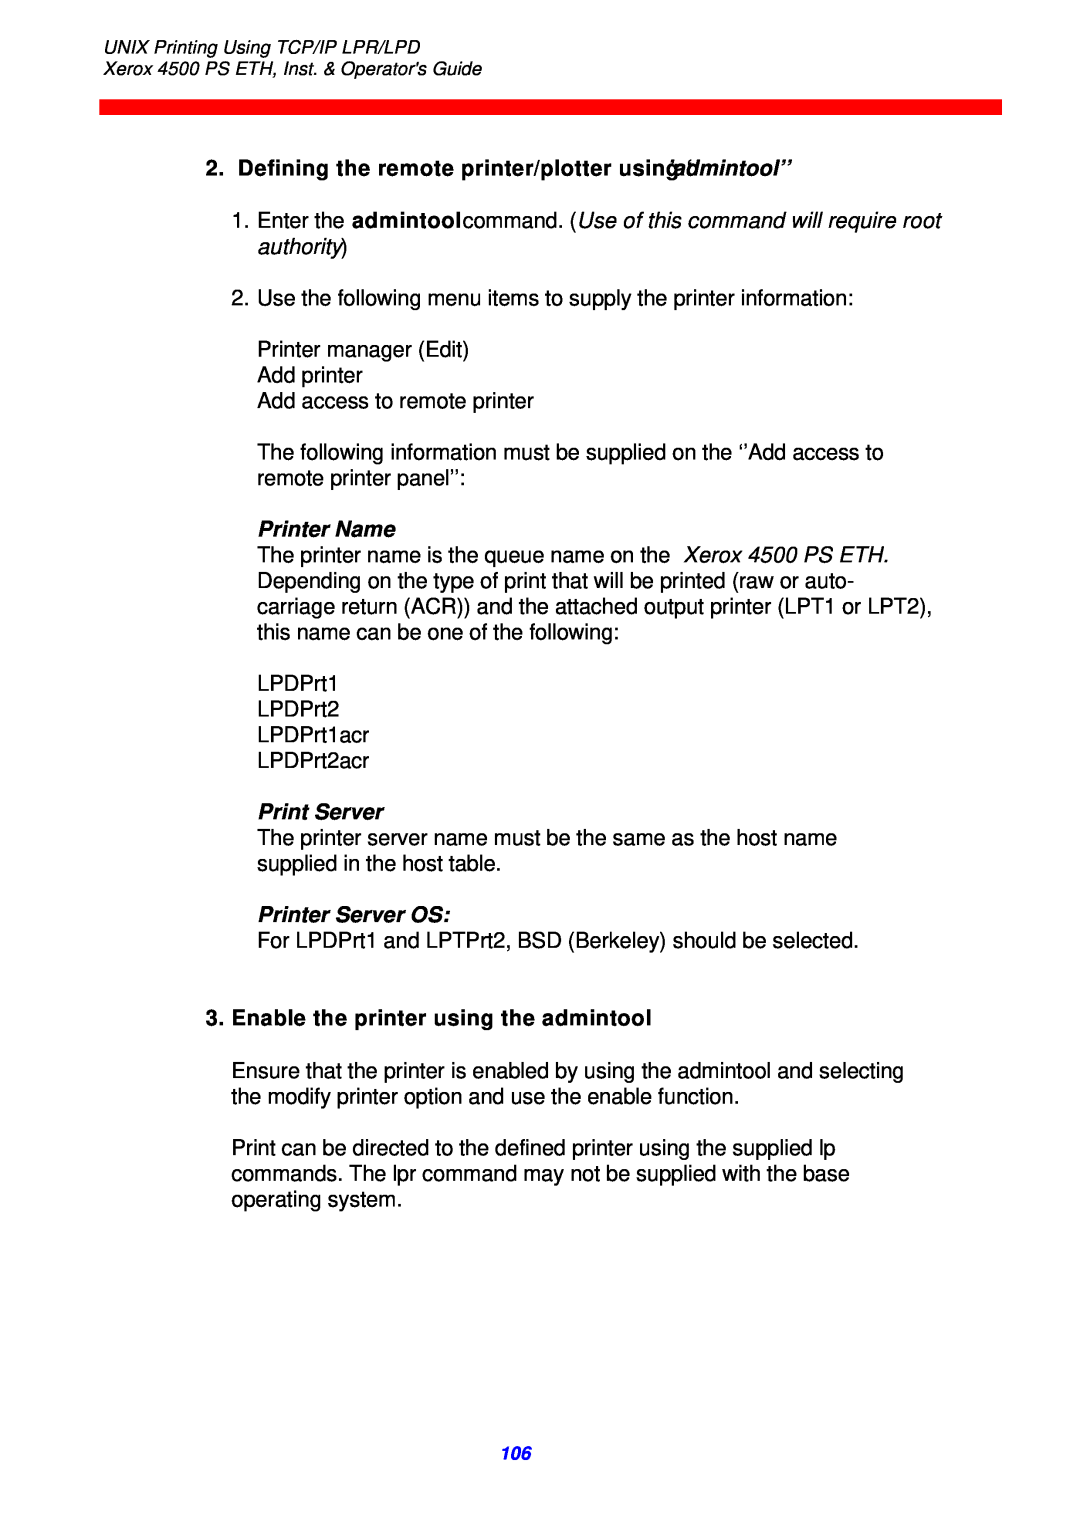 Xerox 4500 ps eth Defining the remote printer/plotter using’admintool’’‘, Printer Name, Print Server, Printer Server OS 